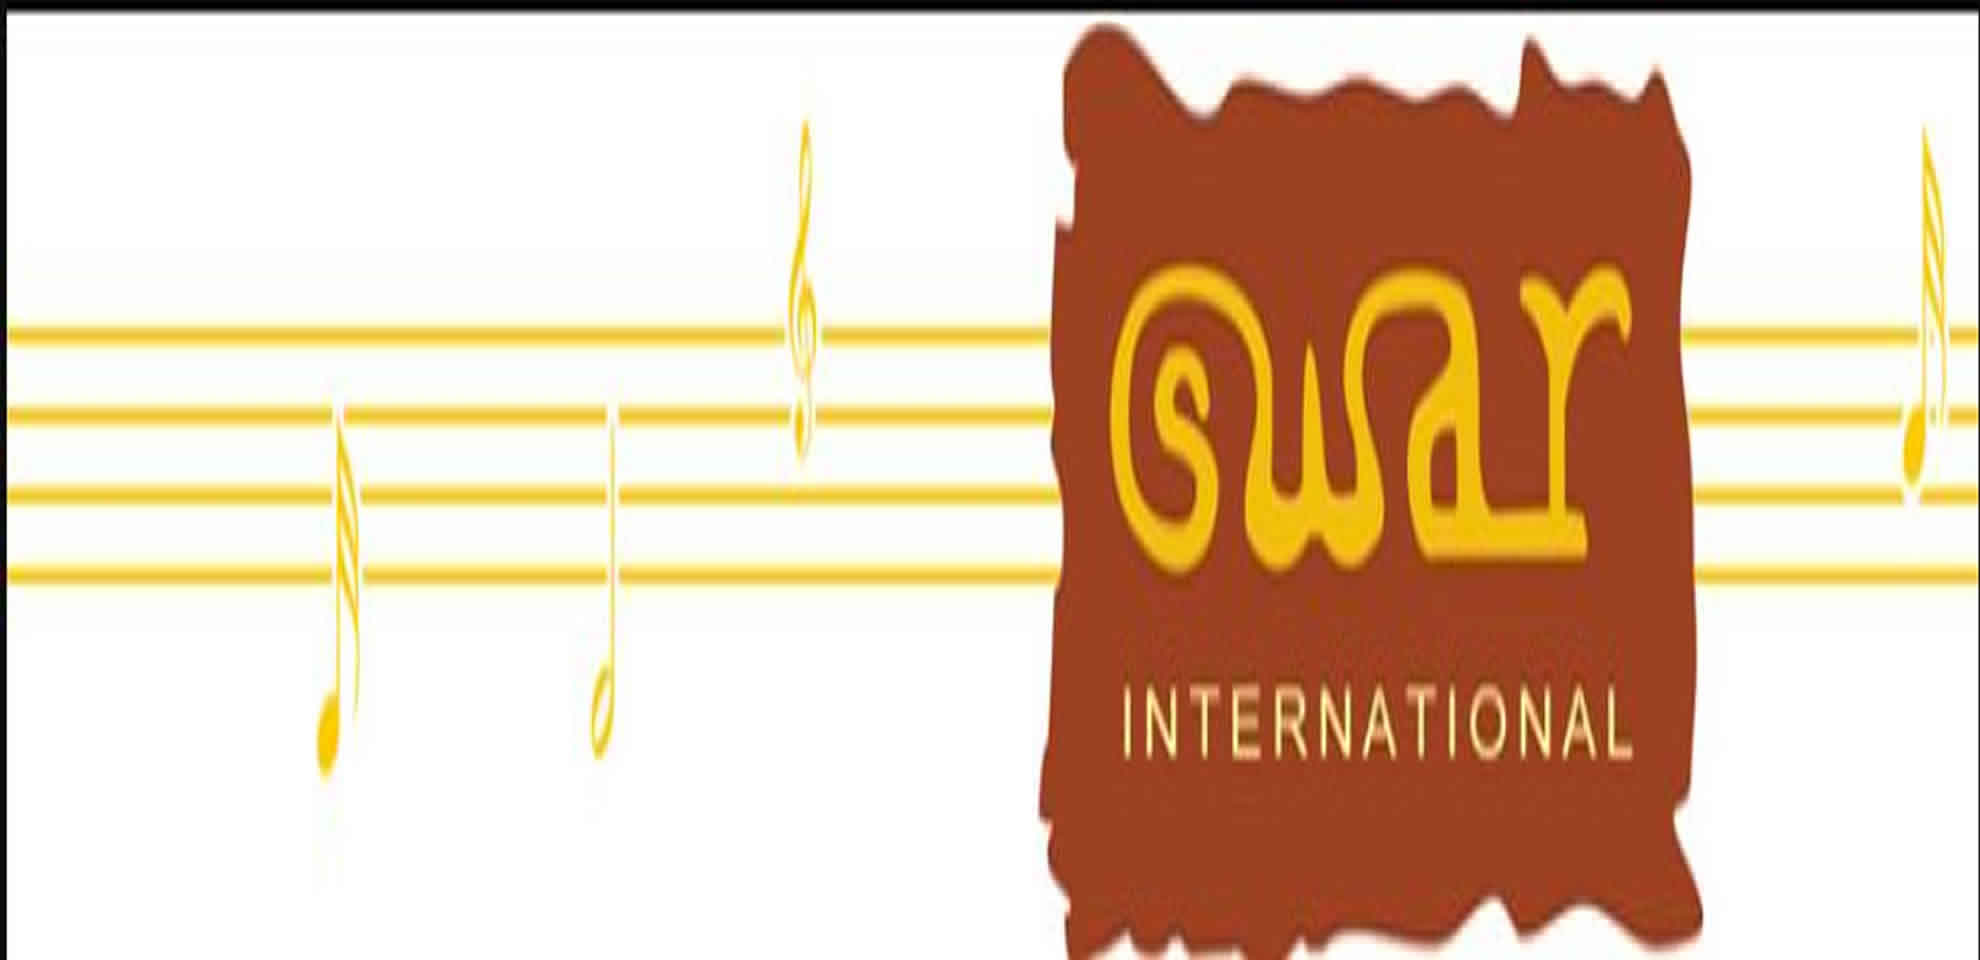 Swar International